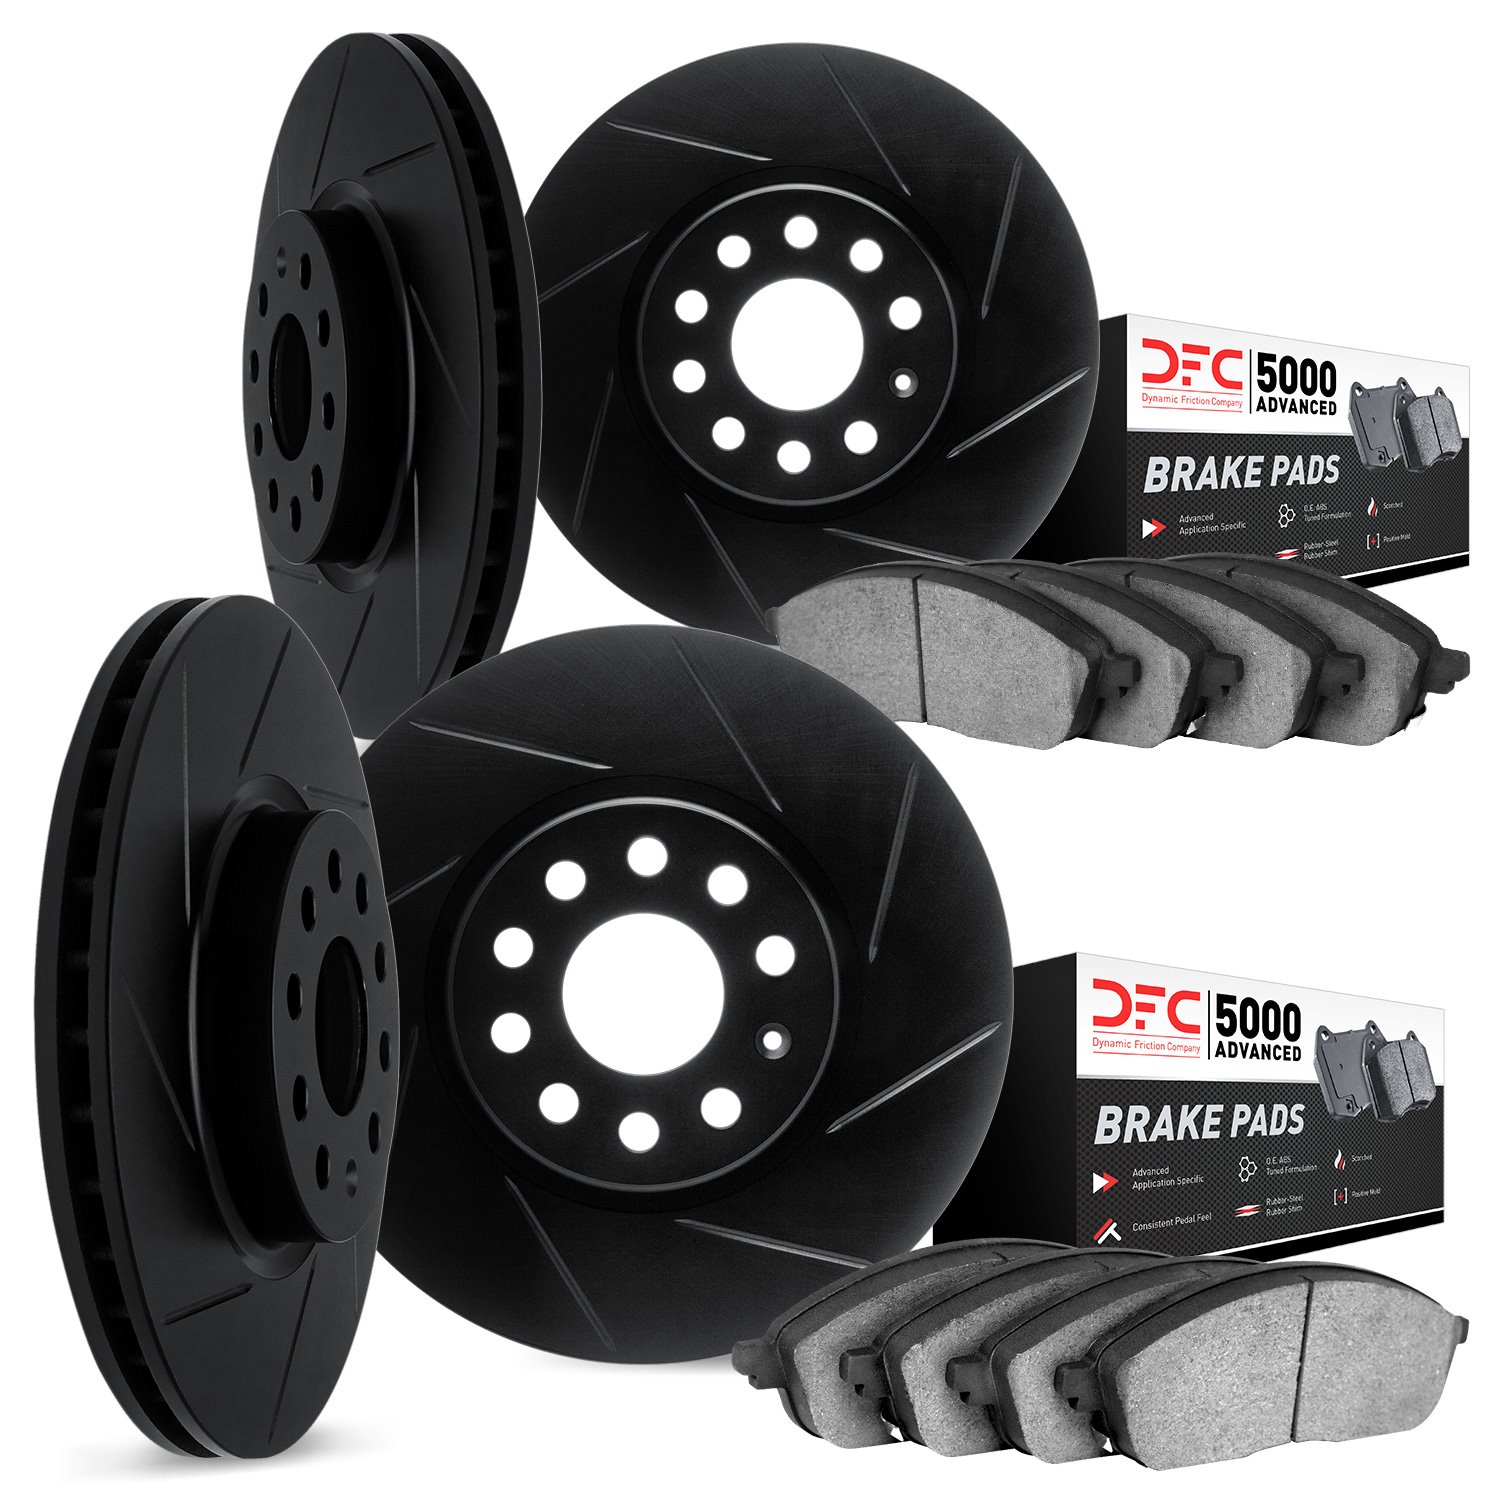 3514-13035 Slotted Brake Rotors w/5000 Advanced Brake Pads Kit & Hardware [Black], 2014-2018 Subaru, Position: Front and Rear